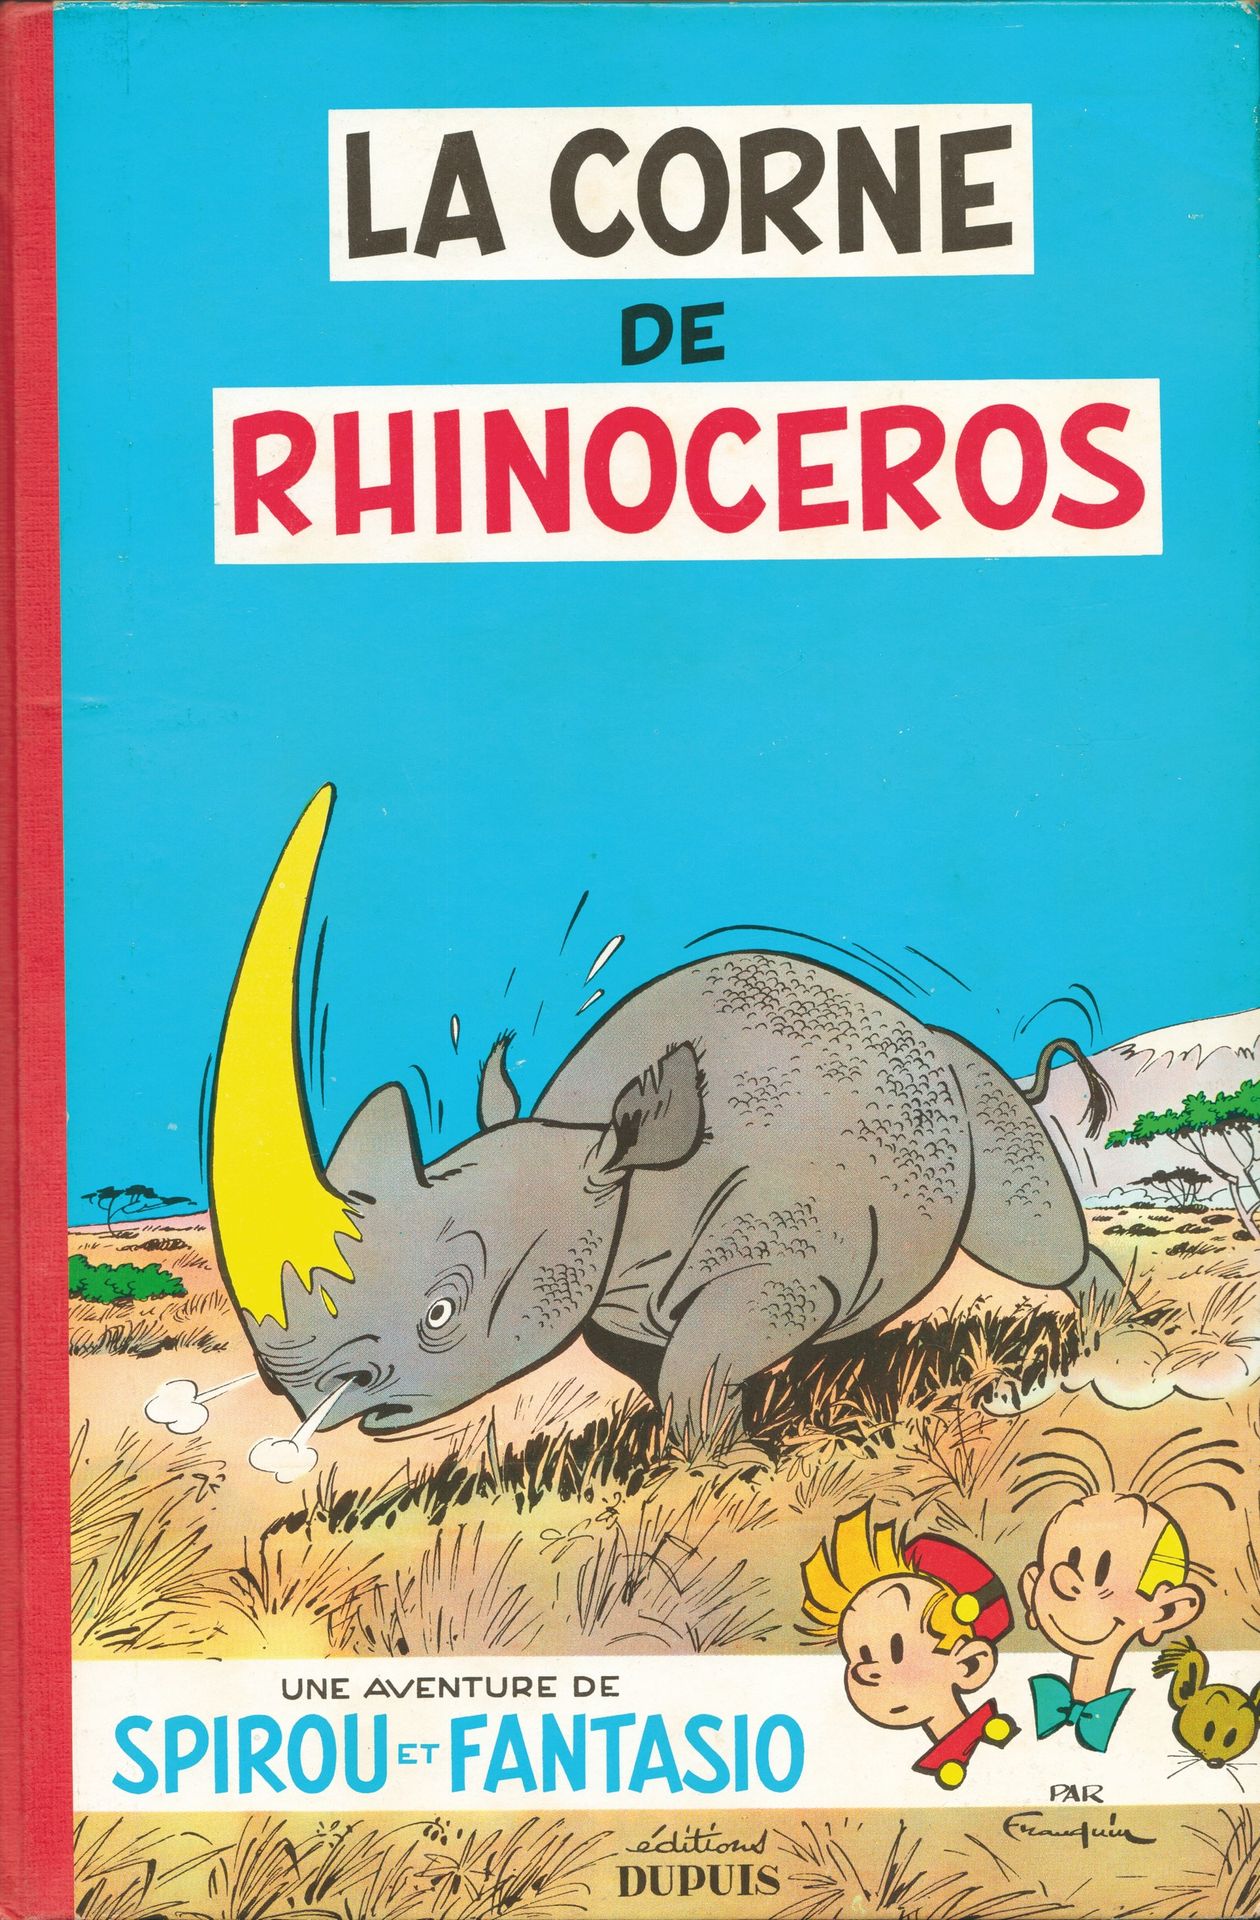 FRANQUIN Spirou et Fantasio. Volume 6: La corne de rhinocéros. Eo belge de 1955 &hellip;